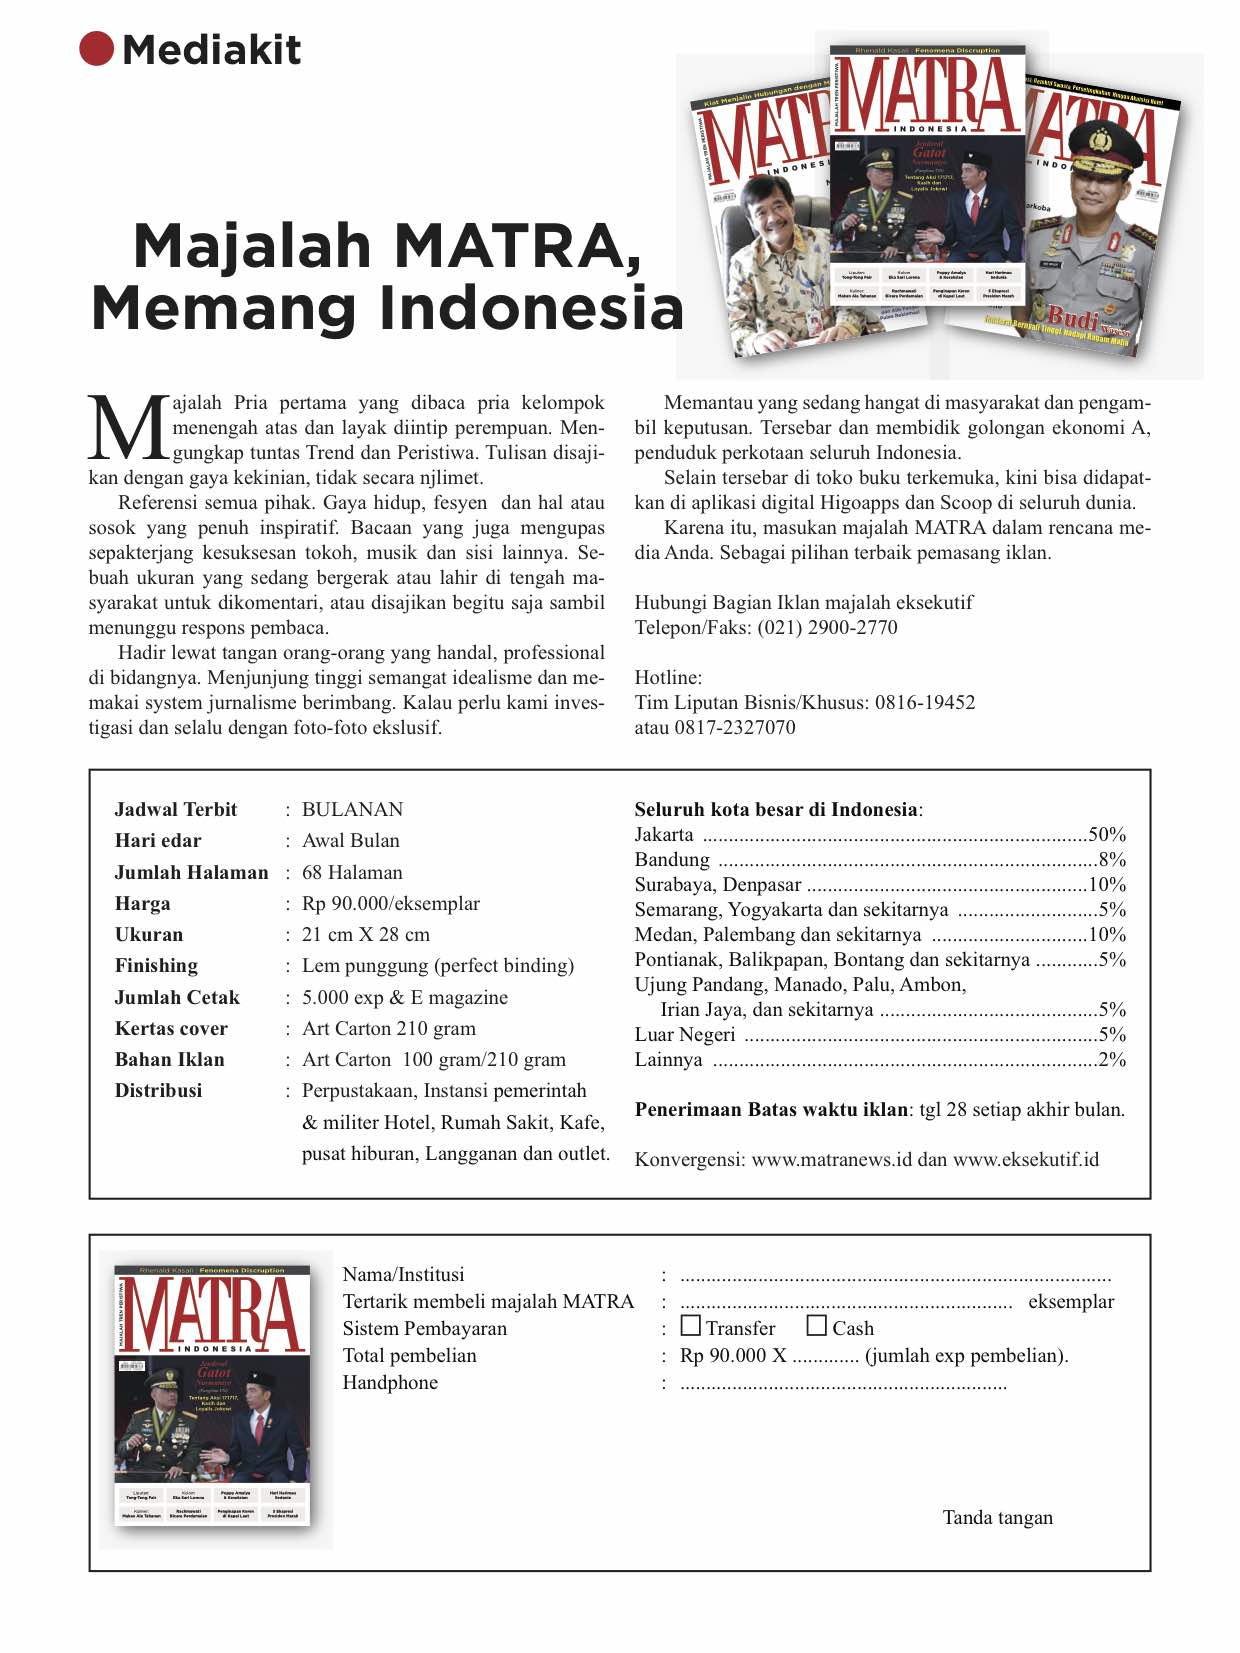 Mediakit Matra 2018